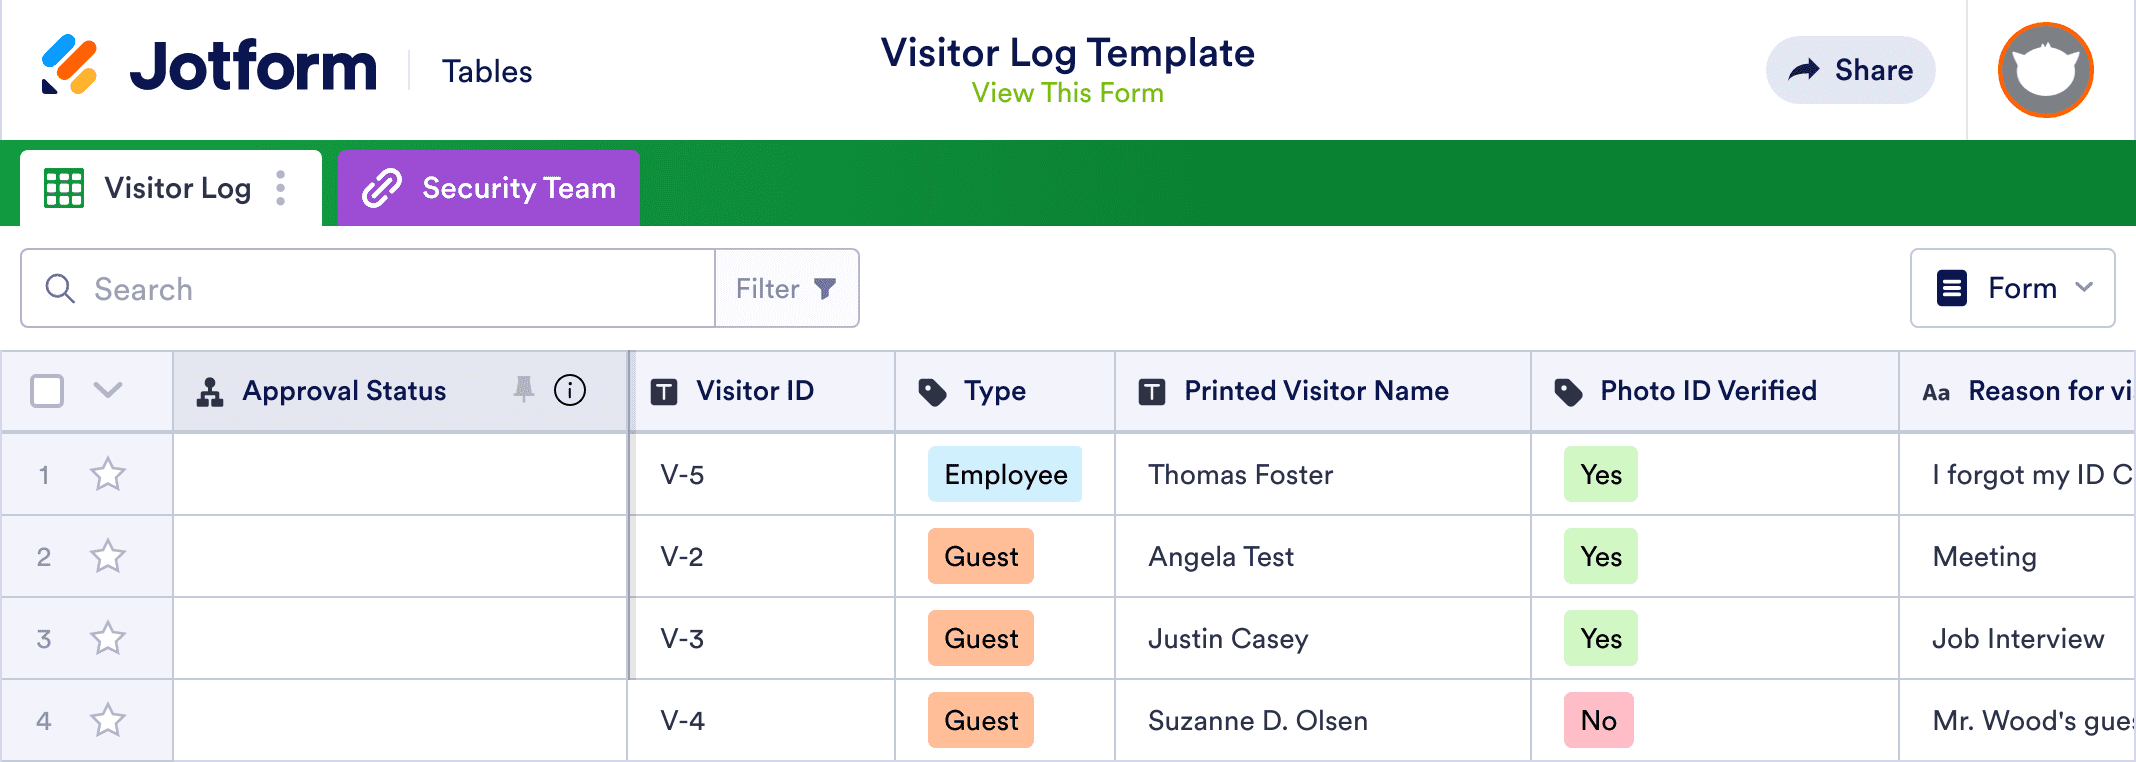 Visitor Log Template